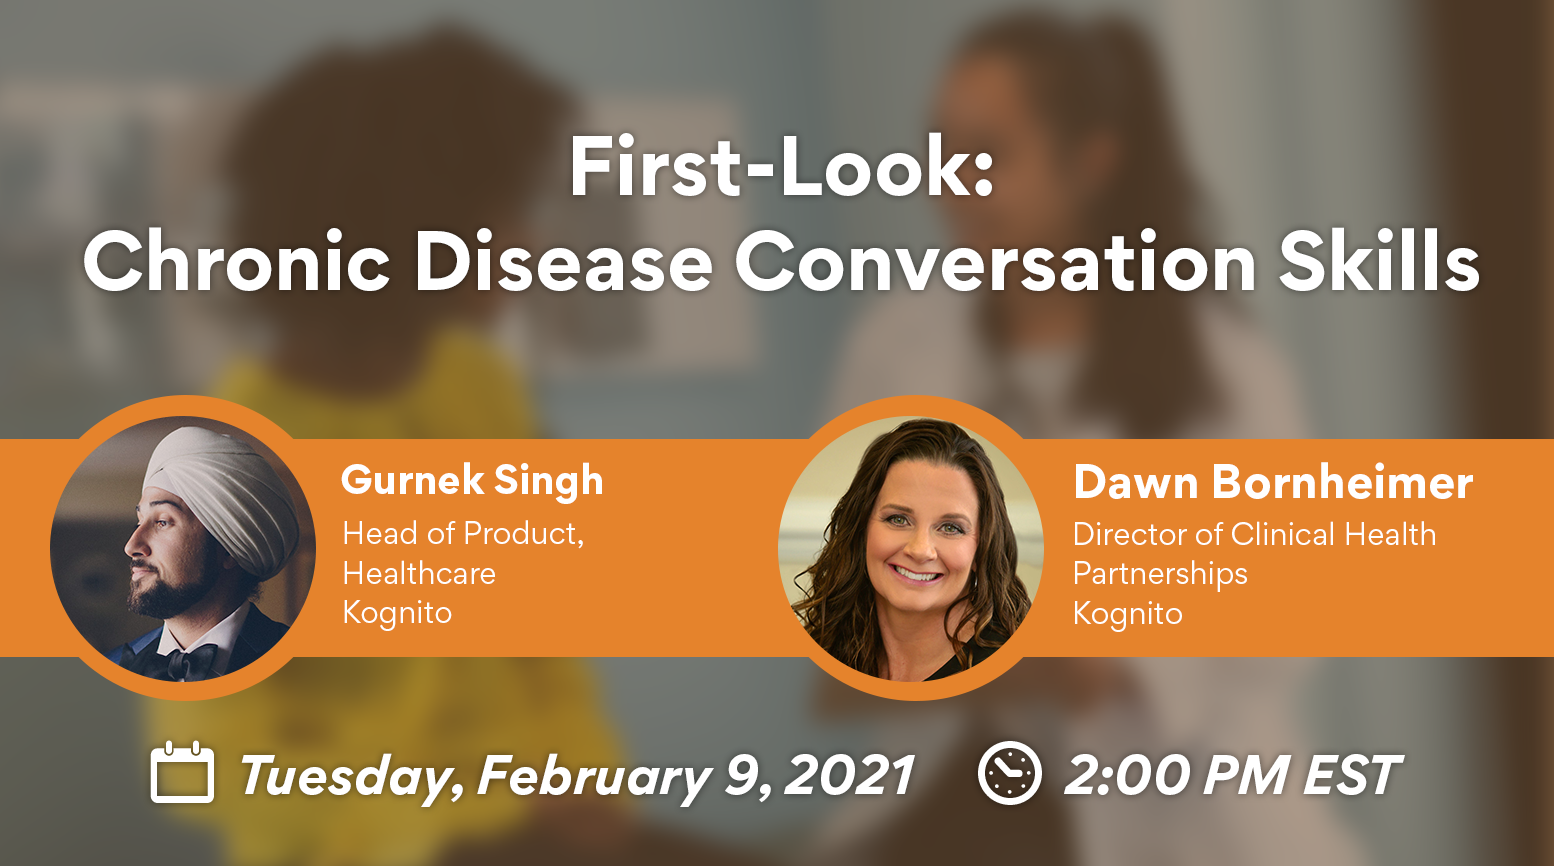 First-Look: Chronic Disease Conversation Skills